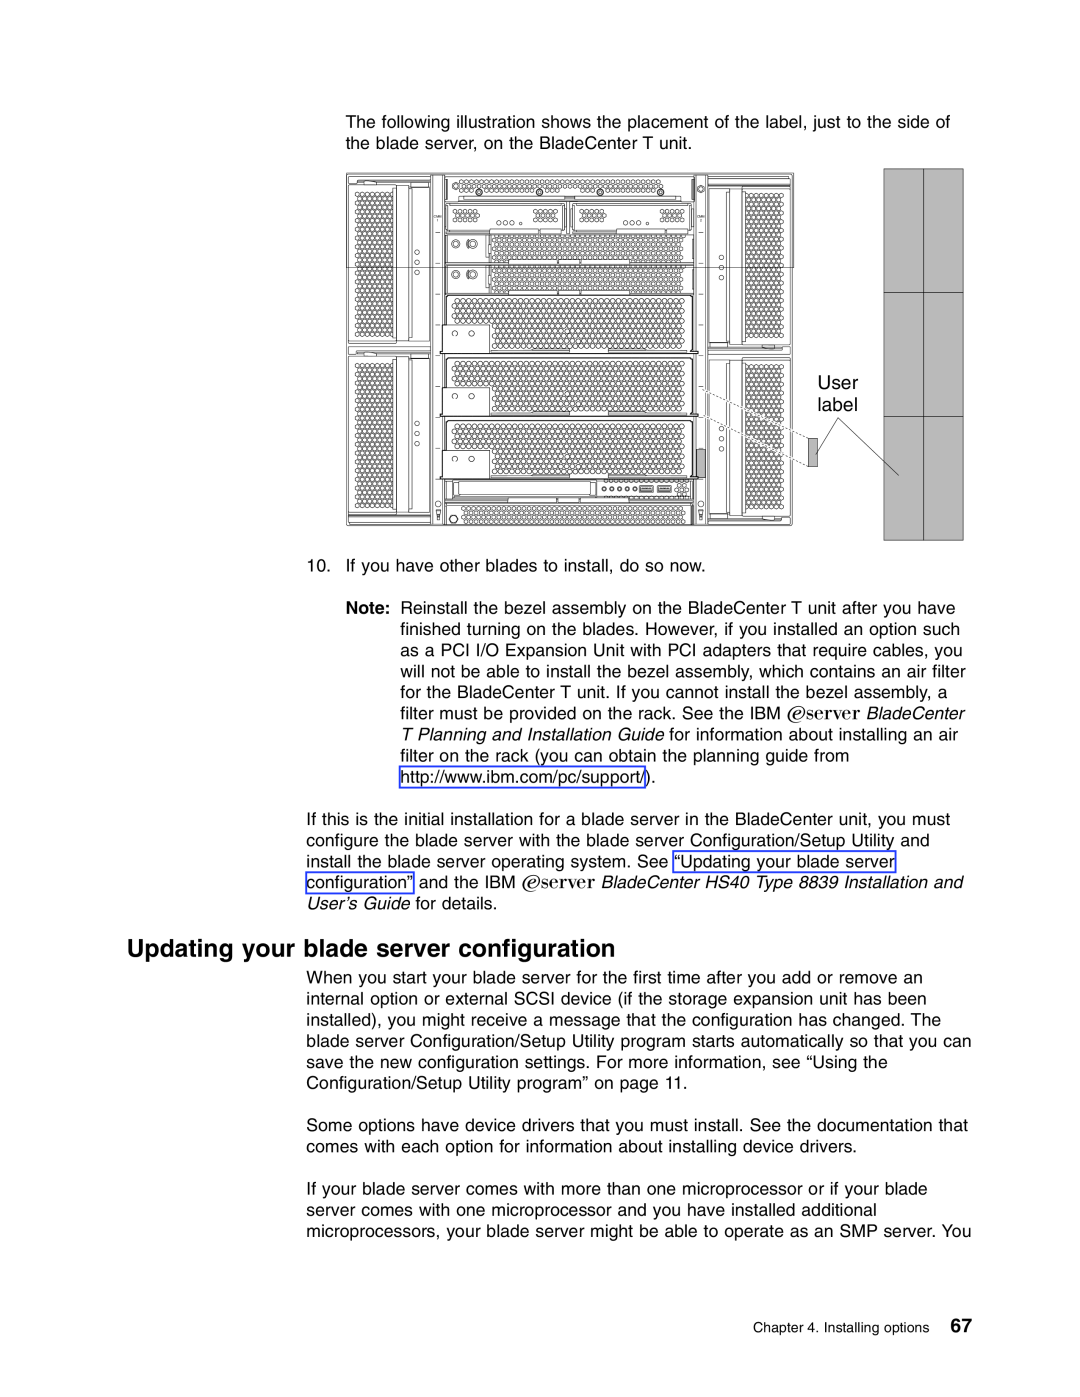 IBM HS40 manual Updating your blade server configuration, User’s Guide for details, User label 